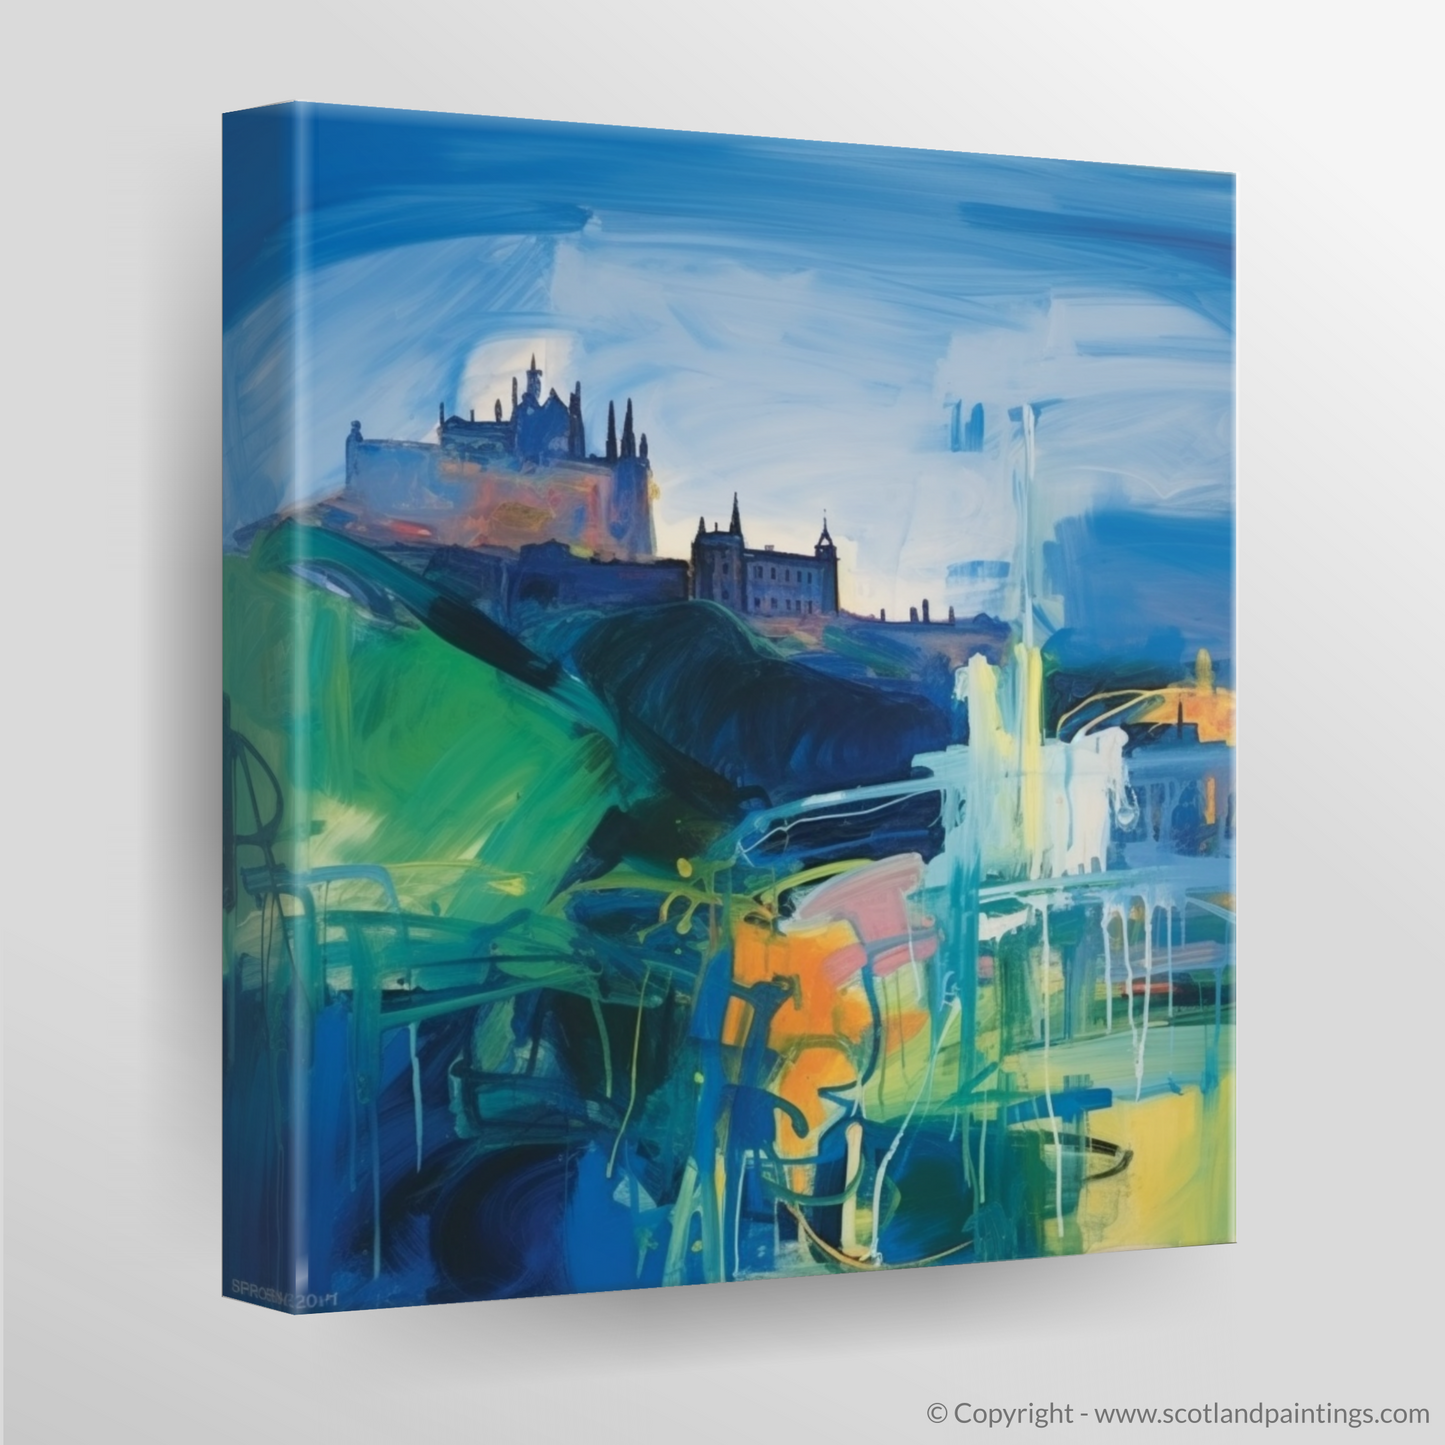 Edinburgh's Essence: A Color Field Tribute to Scotland's Capital